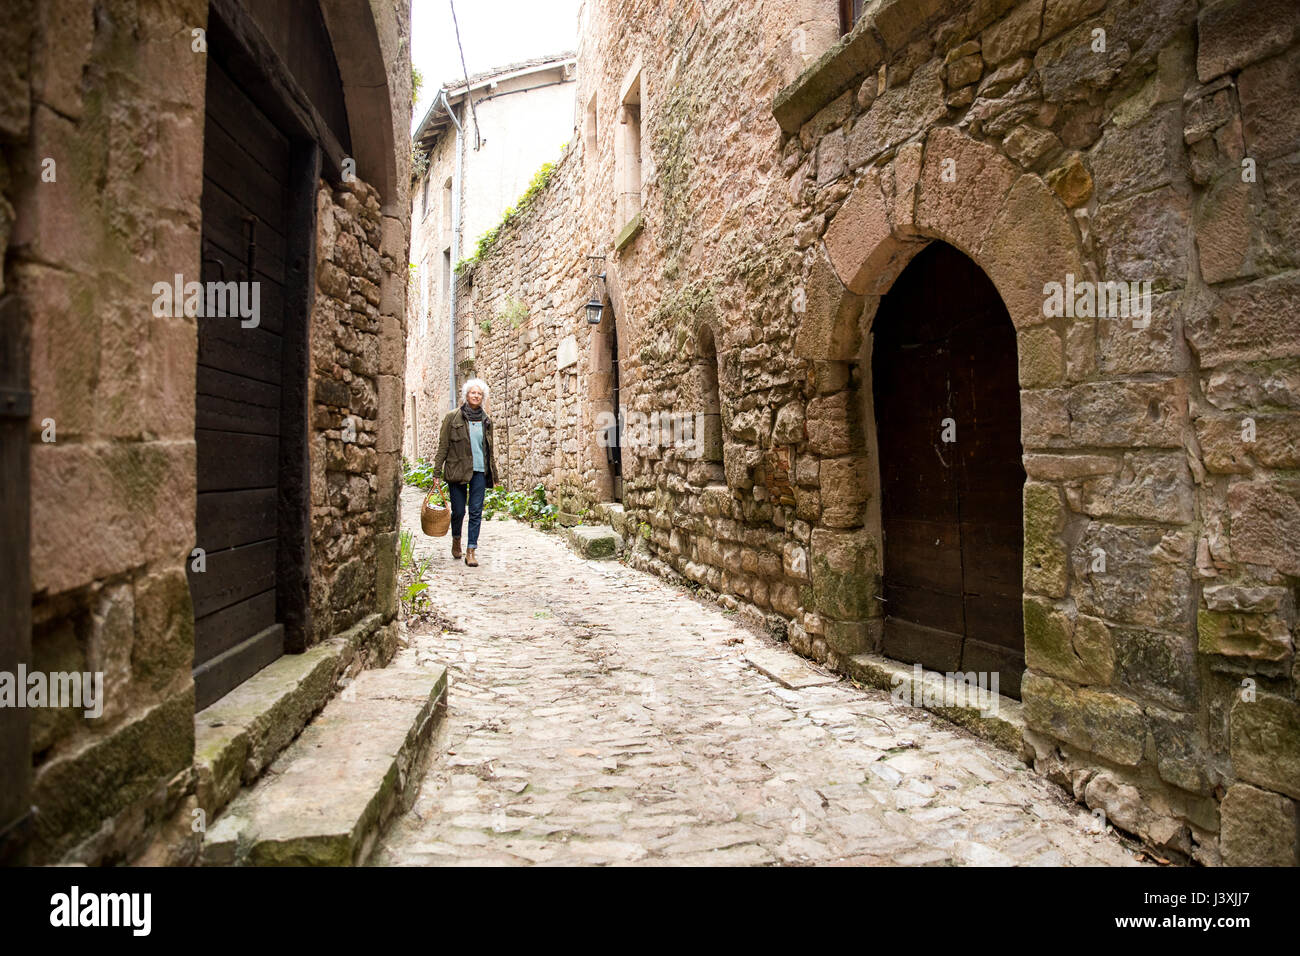 Woman walking in narrow rural street, Bruniquel, France Stock Photo